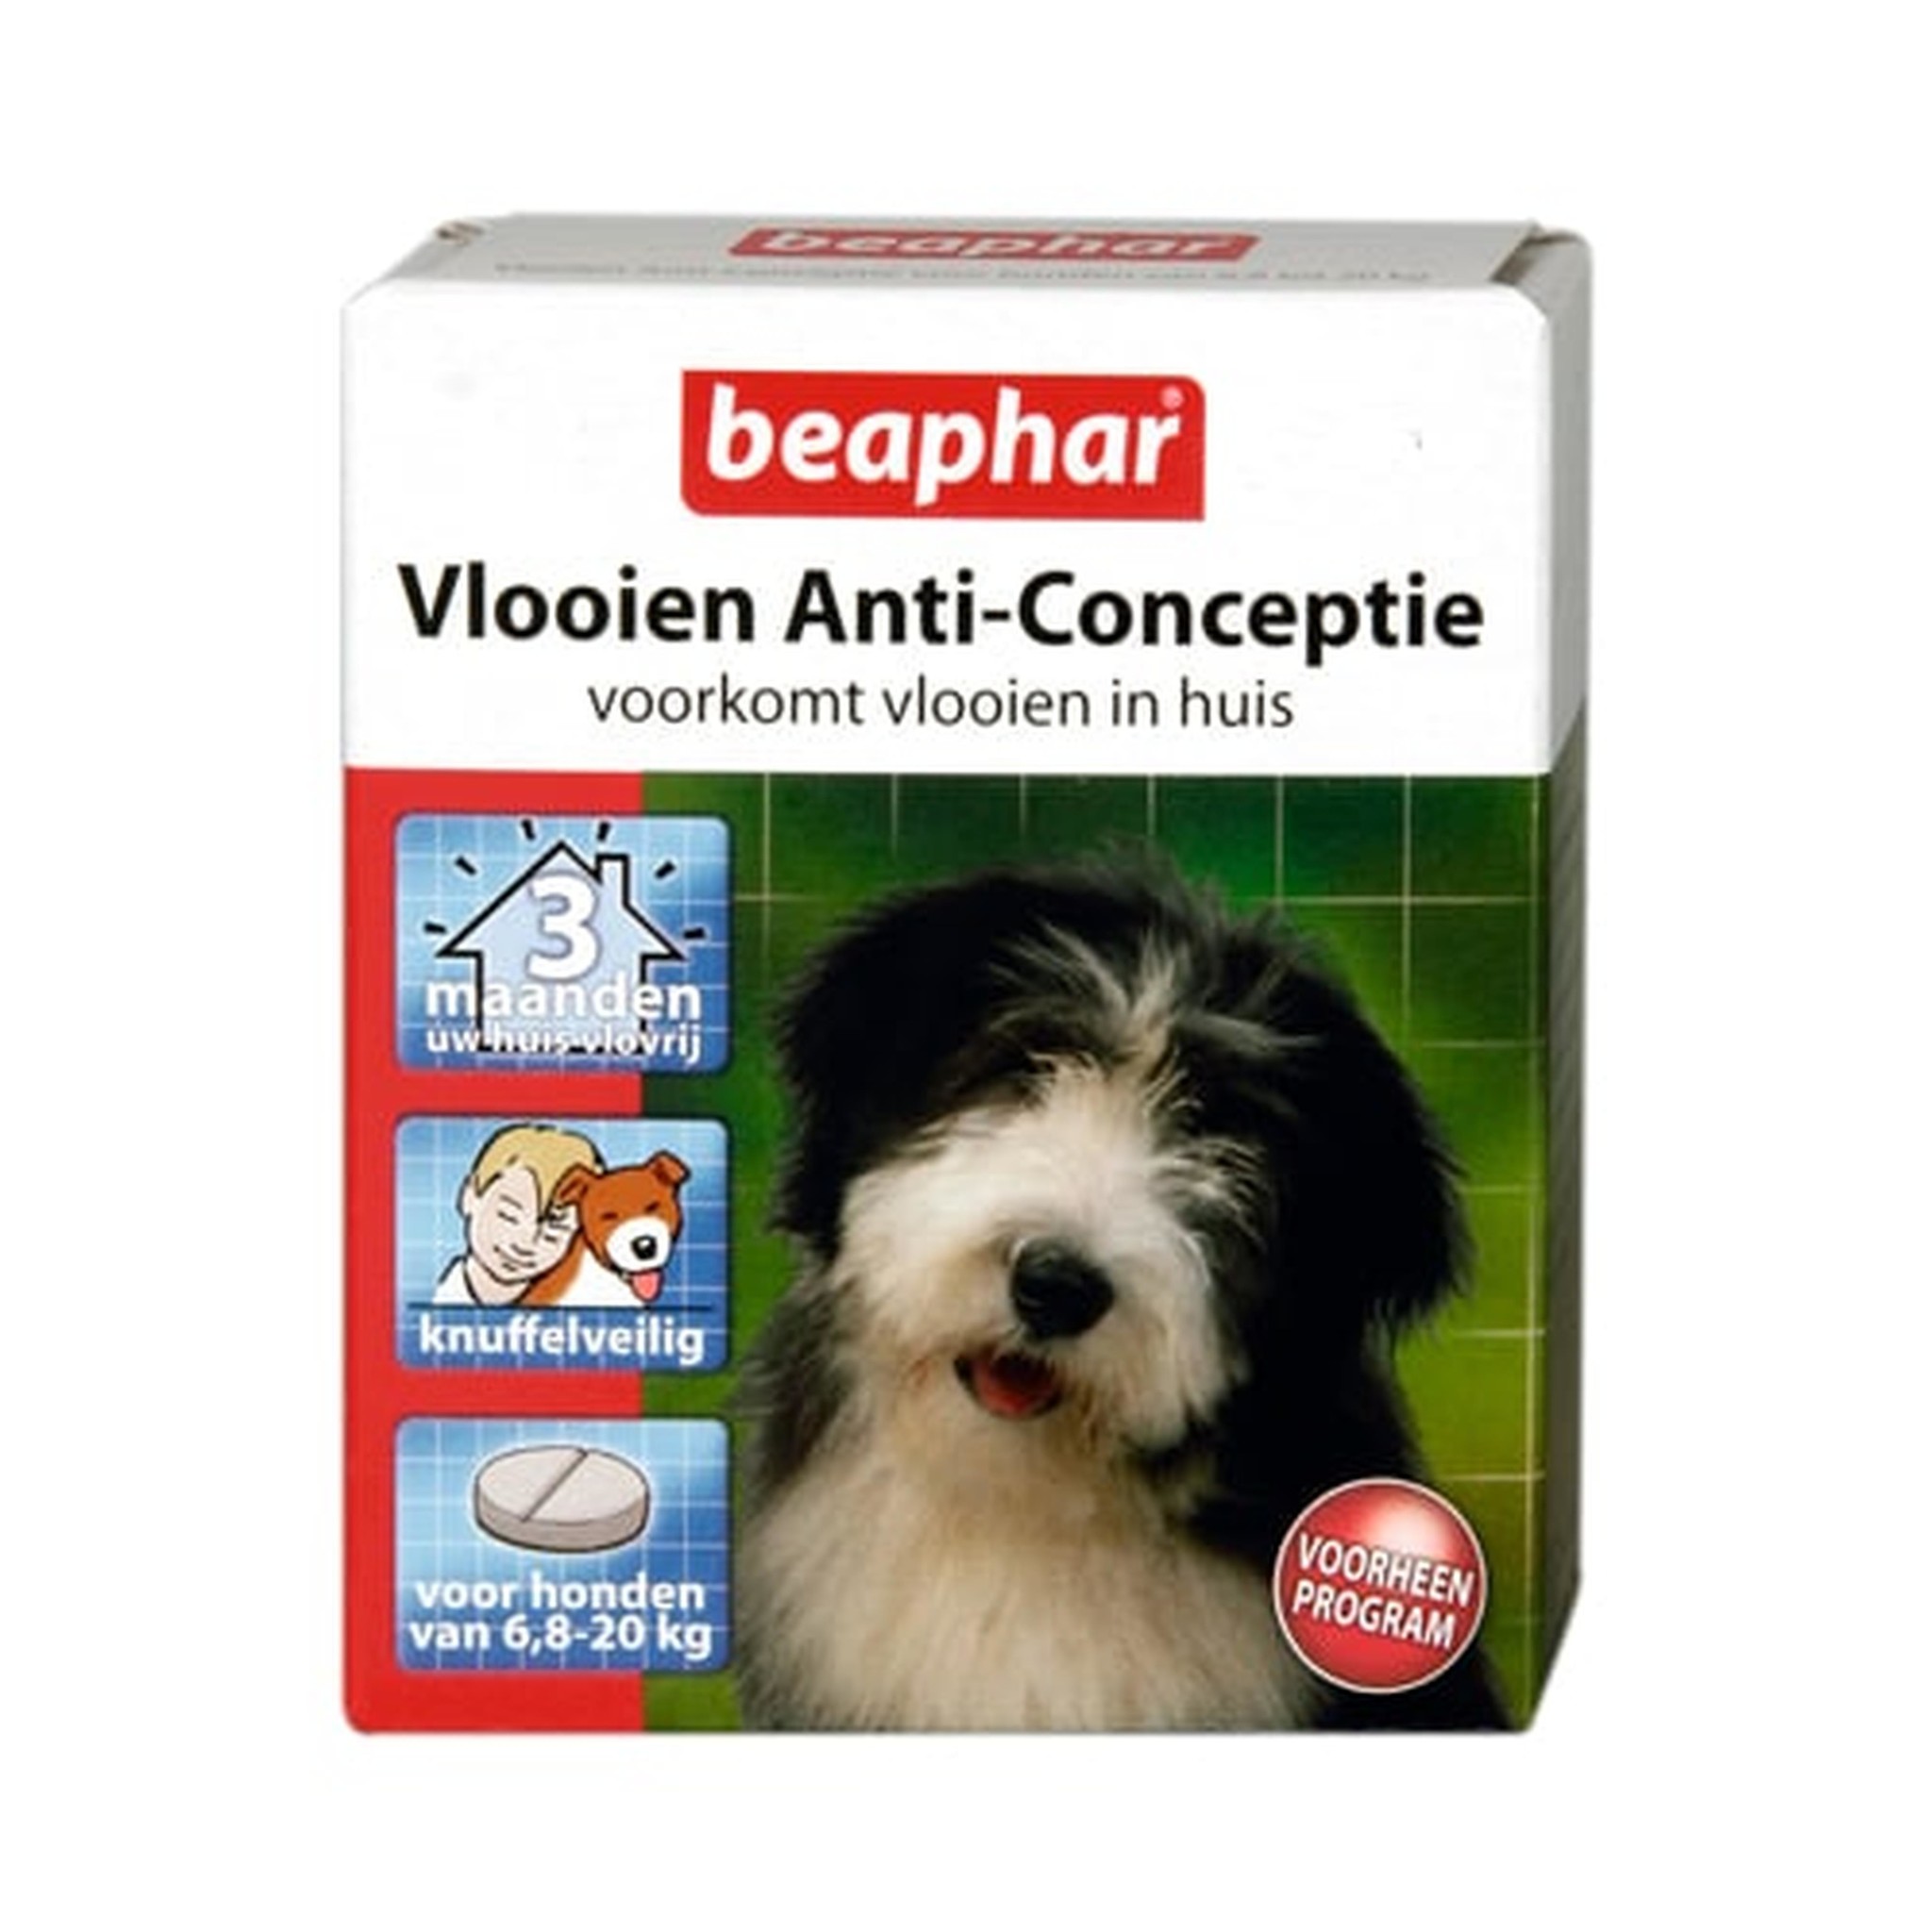 Pardon Prik gebrek Vlooien anti conceptie hond medium 3 tabletten - Beaphar - Webwinkel voor  vijver, aquarium en huisdieren | Beest.nl